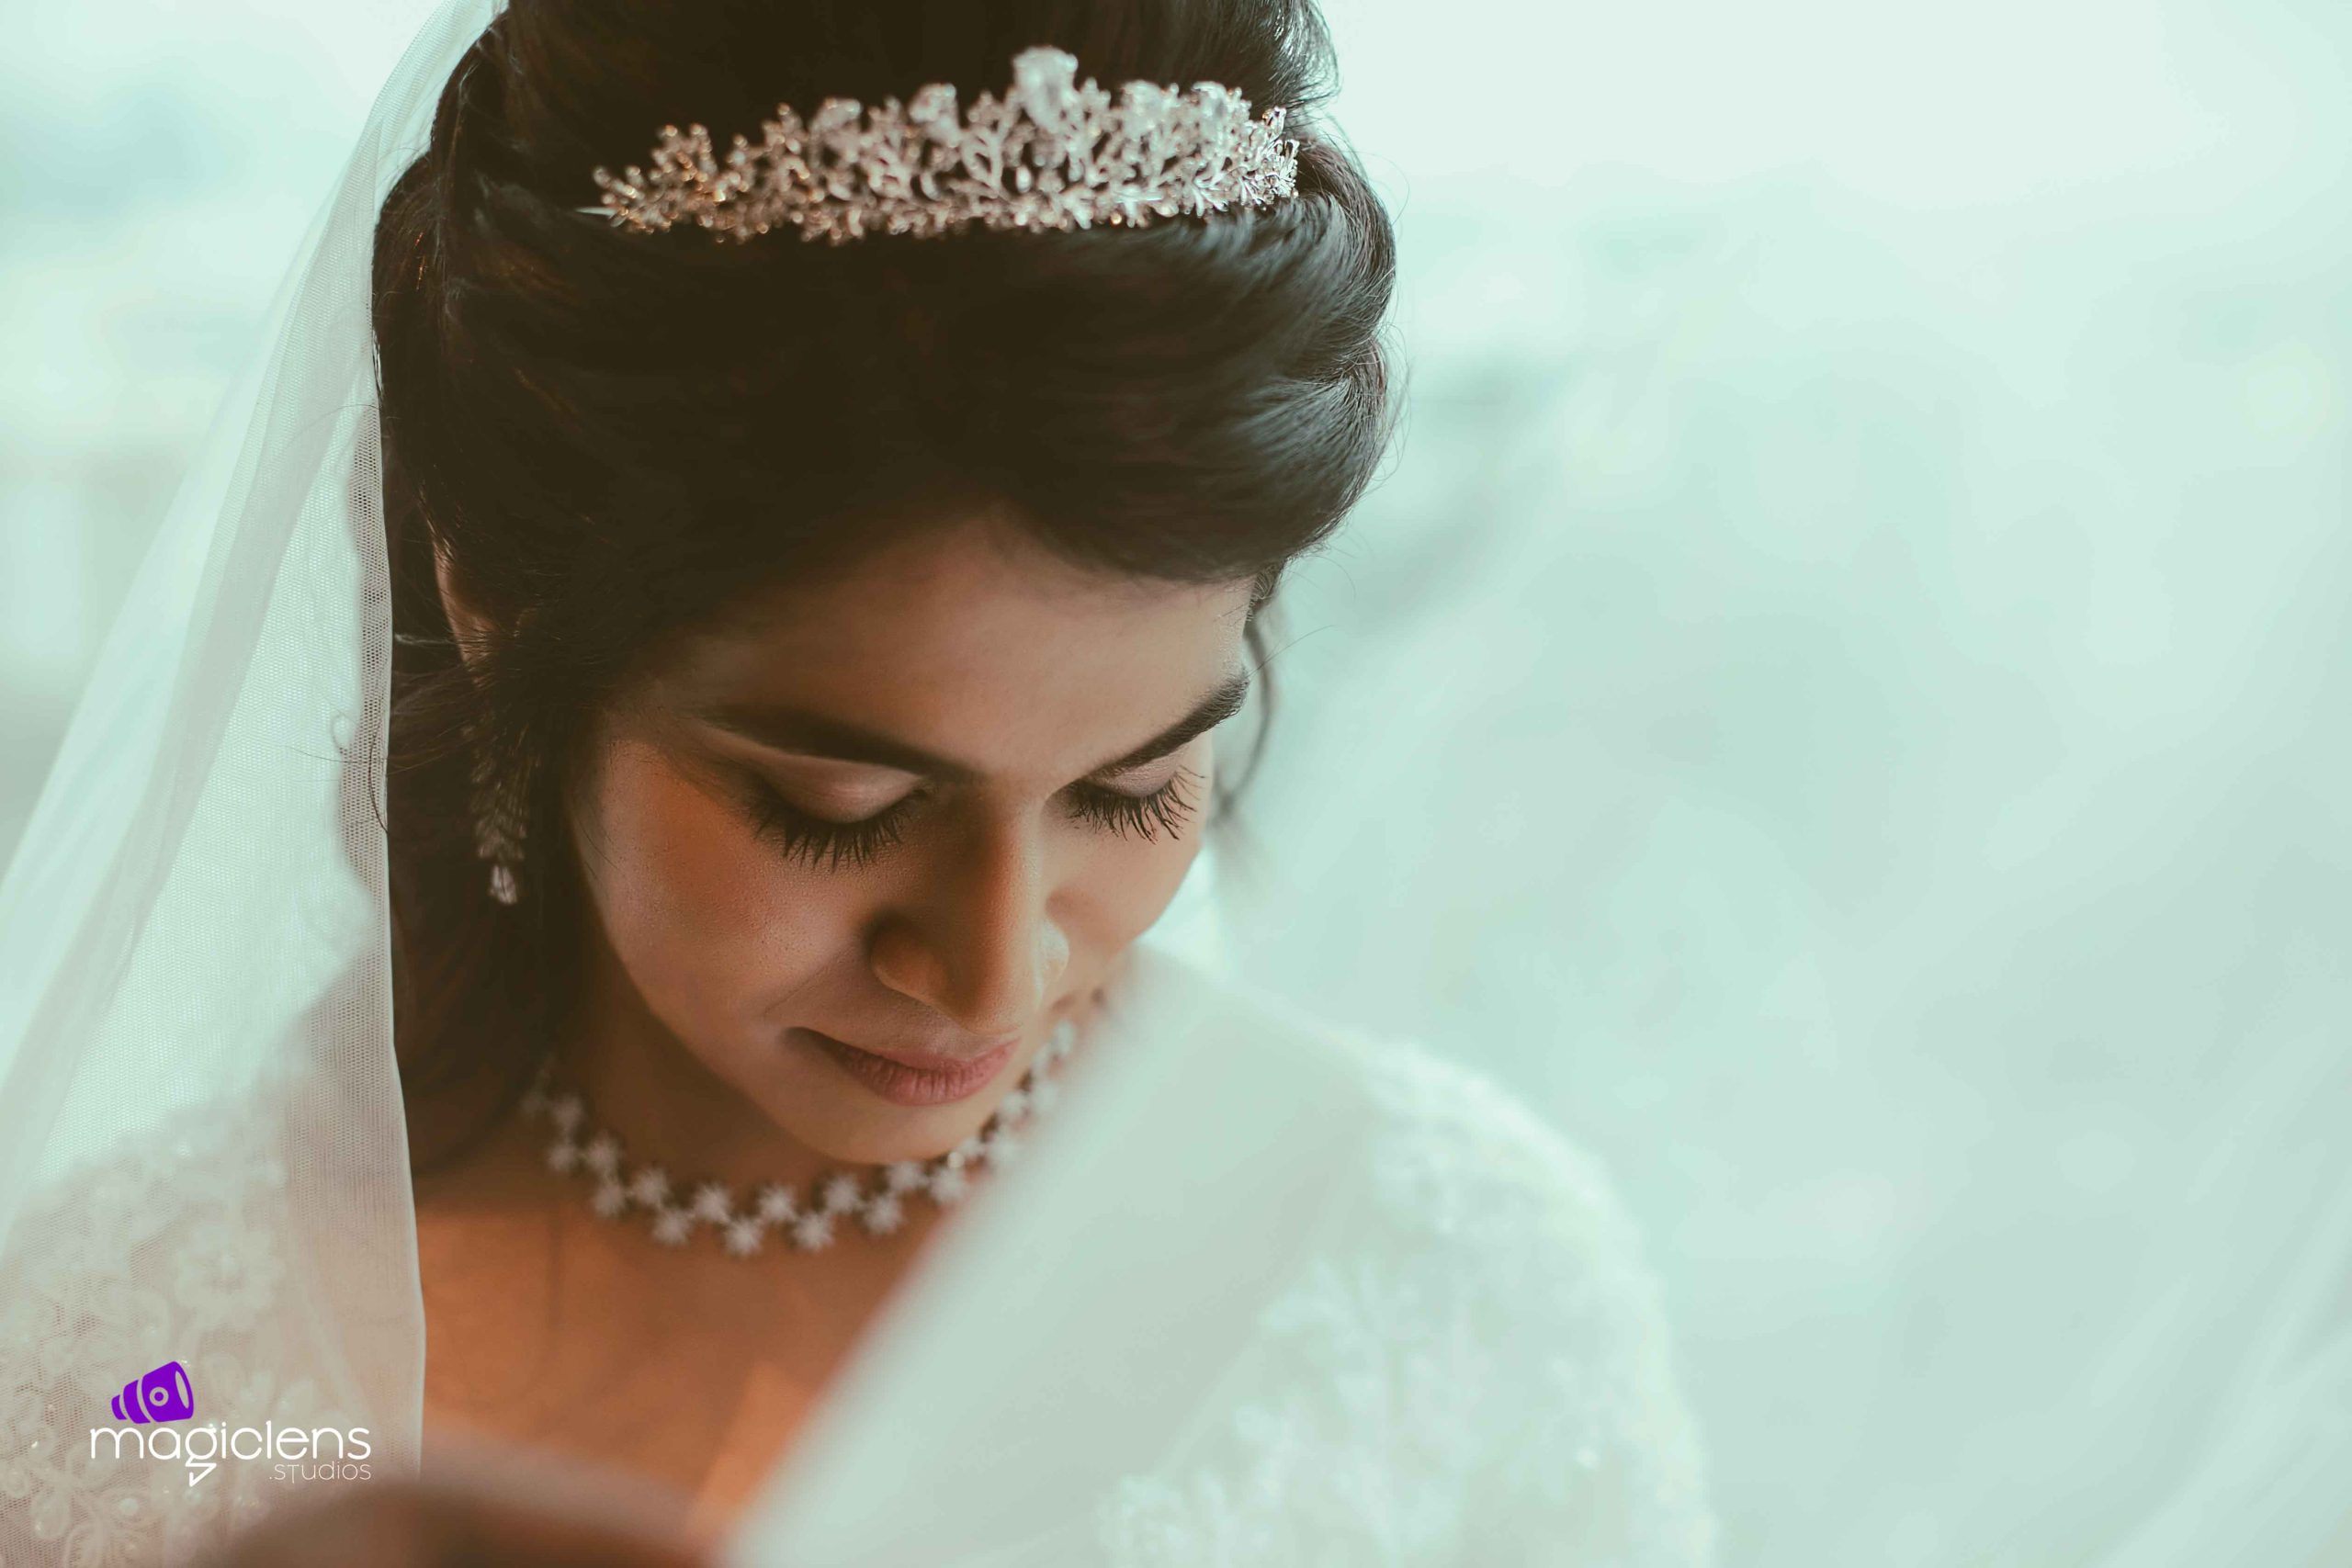 Bridal hair style | At a Christian wedding | Antony Pratap | Flickr